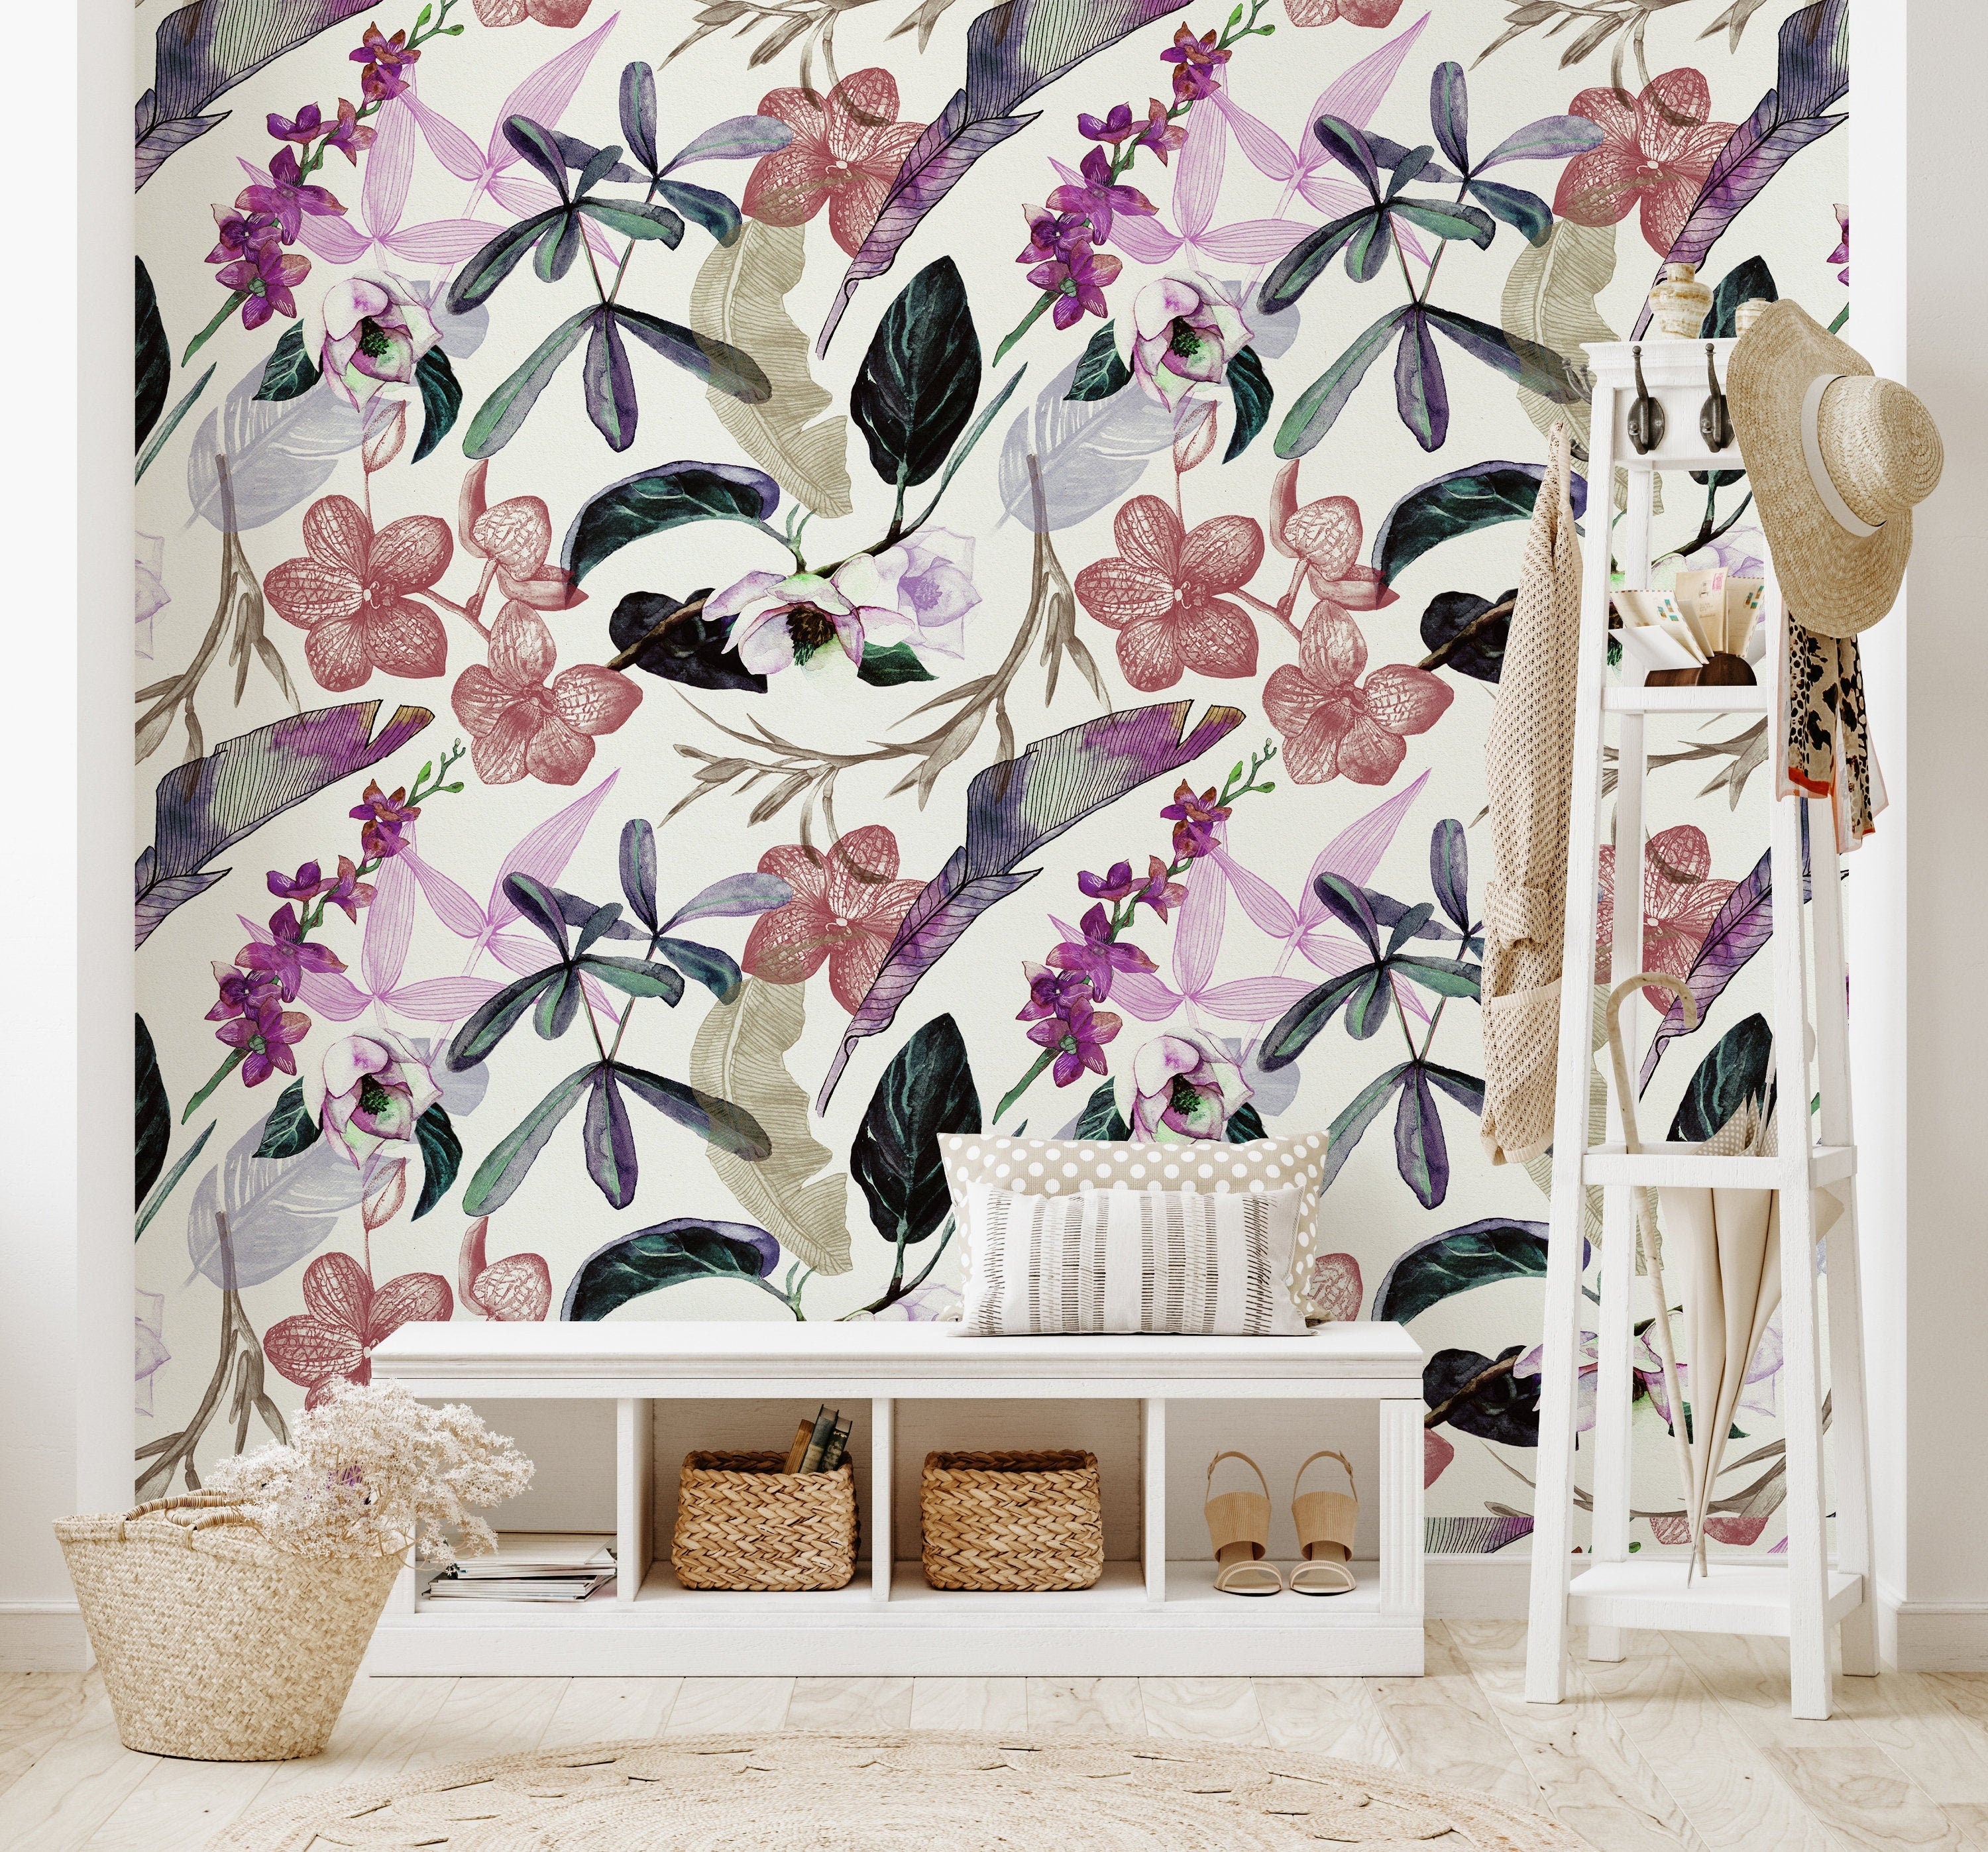 Purple Tropical Floral Wallpaper | Removable Wallpaper | Peel And Stick Wallpaper | Adhesive Wallpaper | Wall Paper Peel Stick Mural 2351 - JamesAndColors